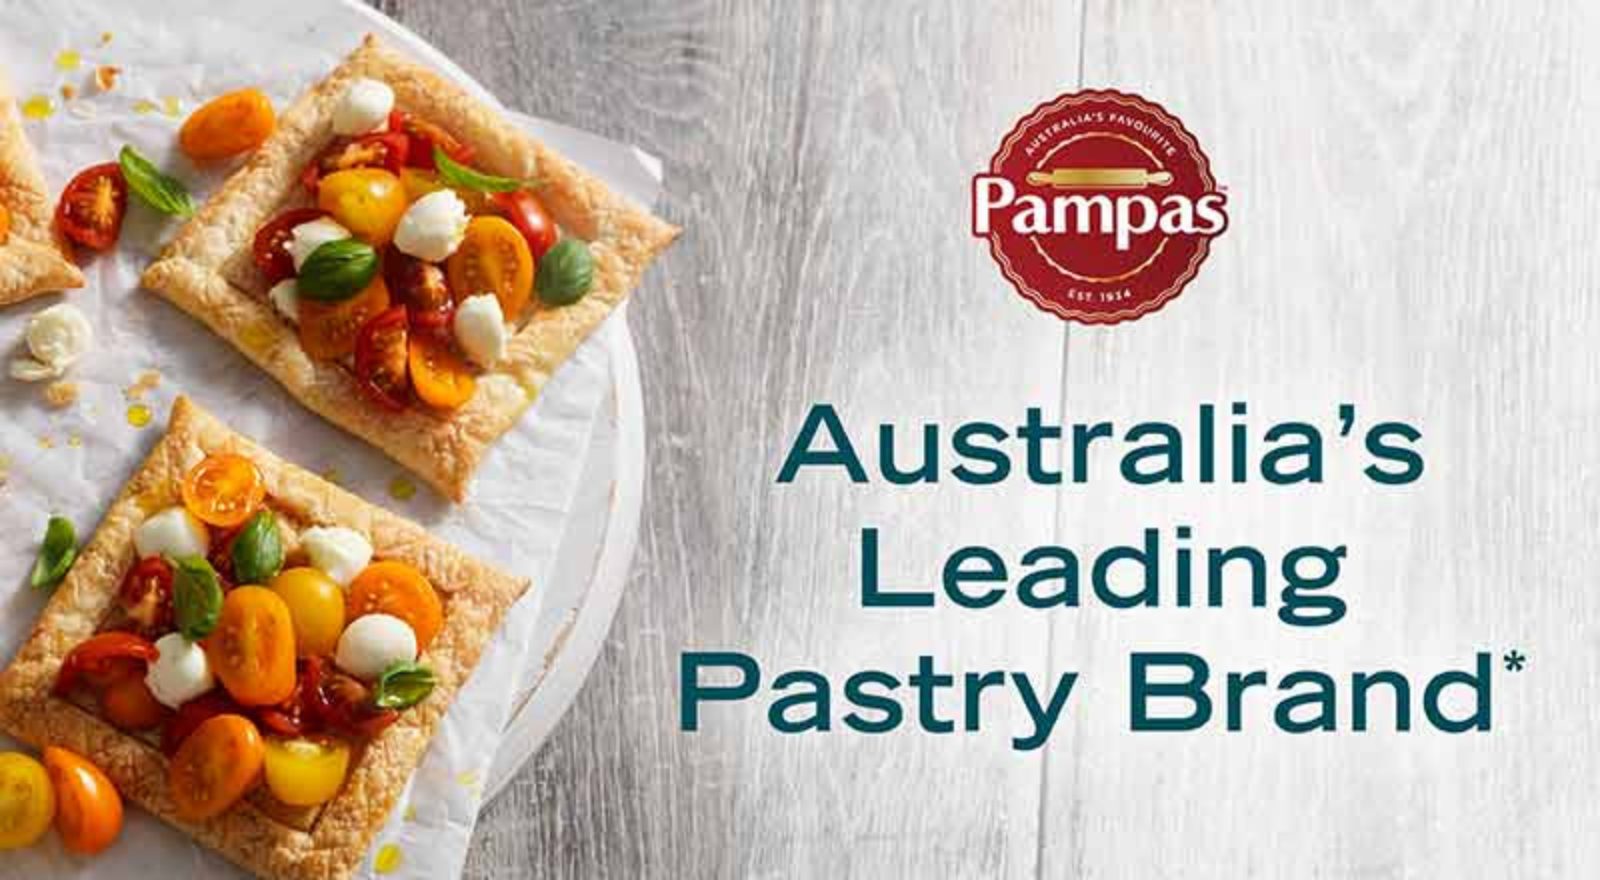 Pampas - Australia's Leading Pastry Brand